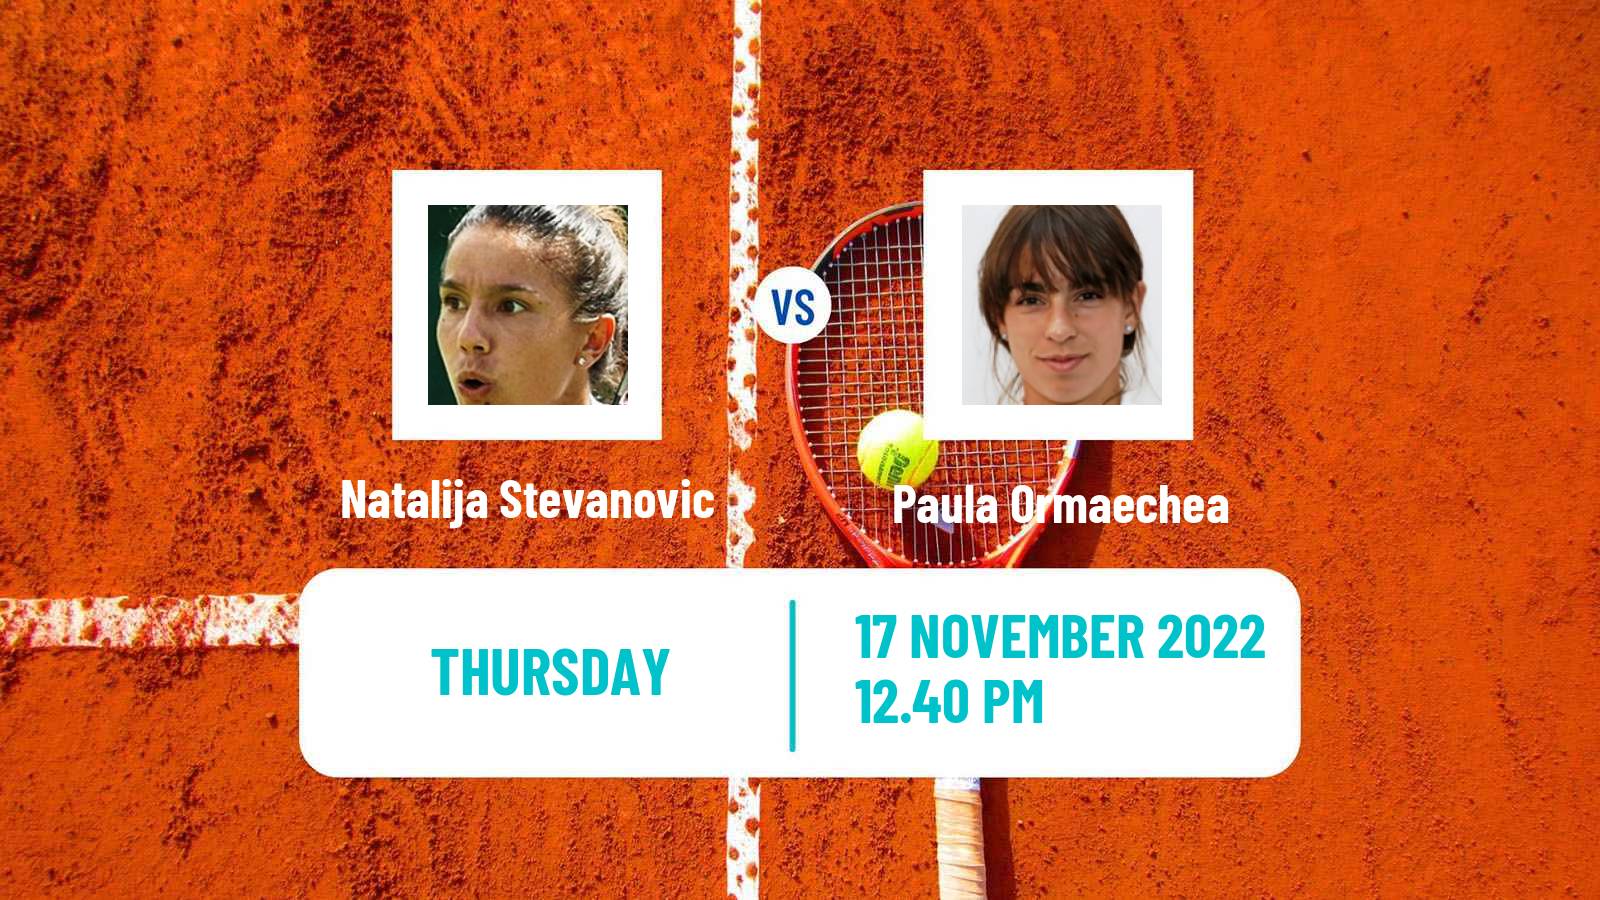 Tennis ATP Challenger Natalija Stevanovic - Paula Ormaechea